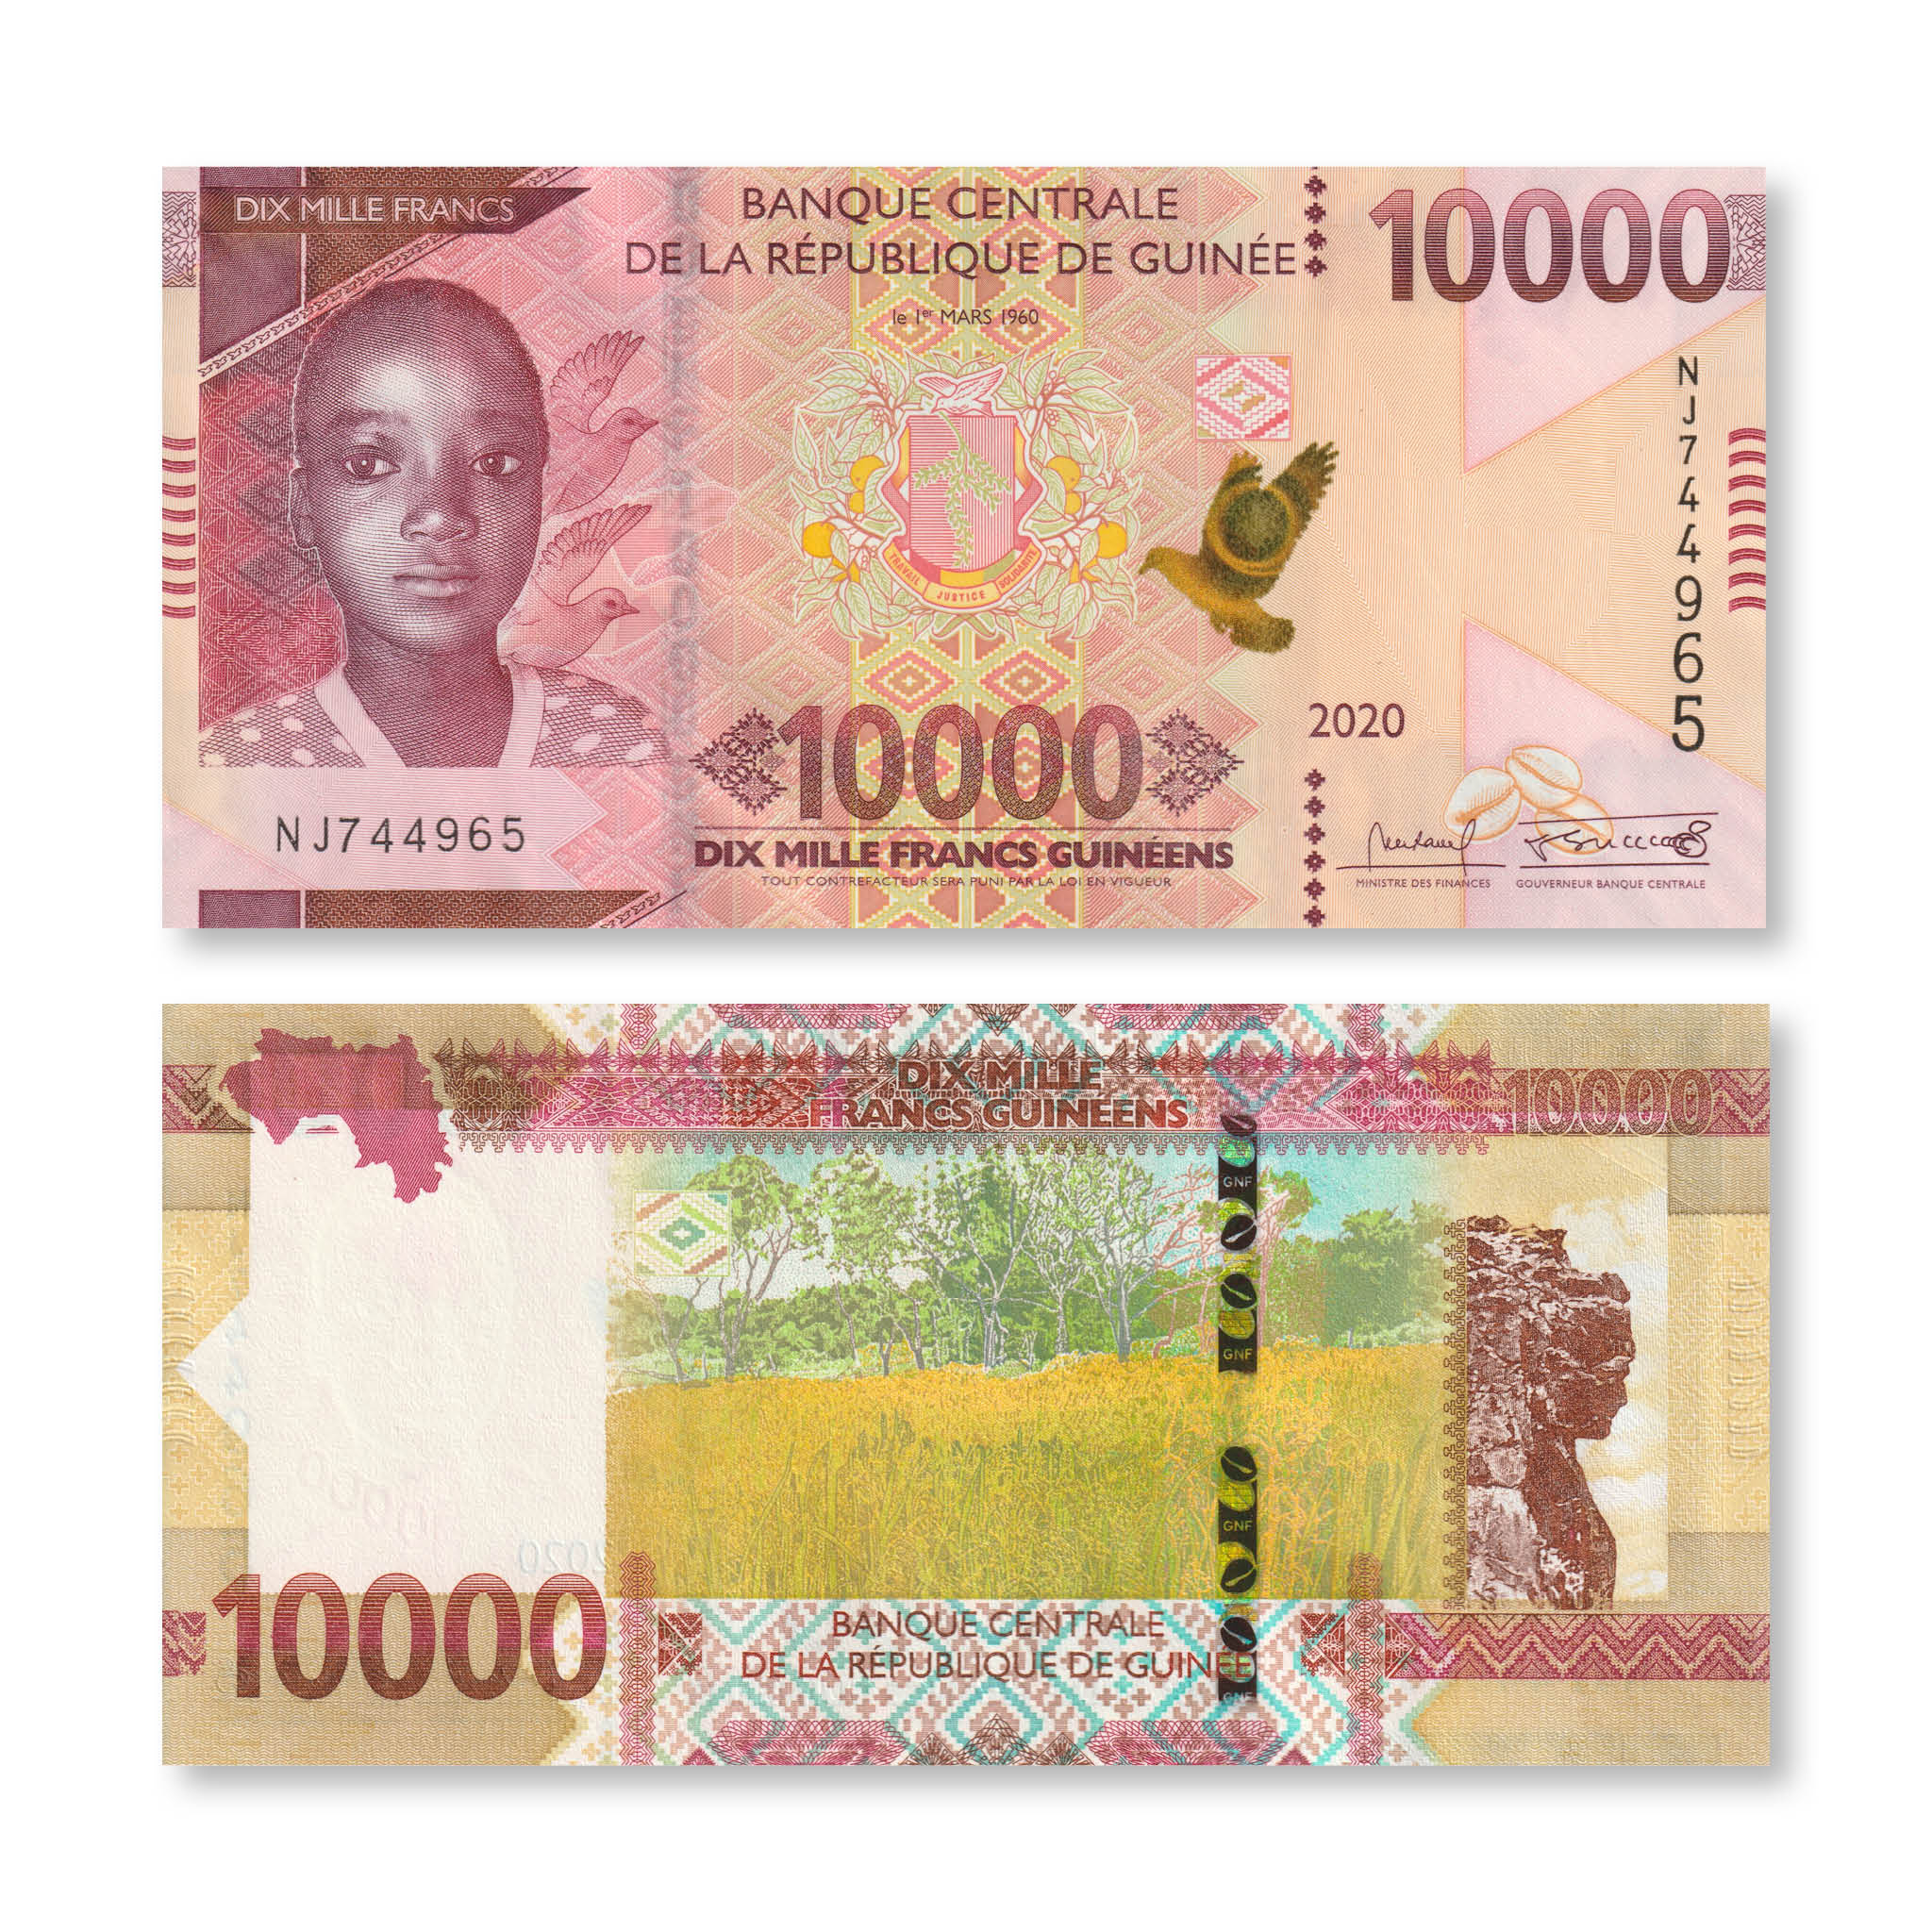 Guinea 10000 Francs, 2020, B343b, UNC - Robert's World Money - World Banknotes